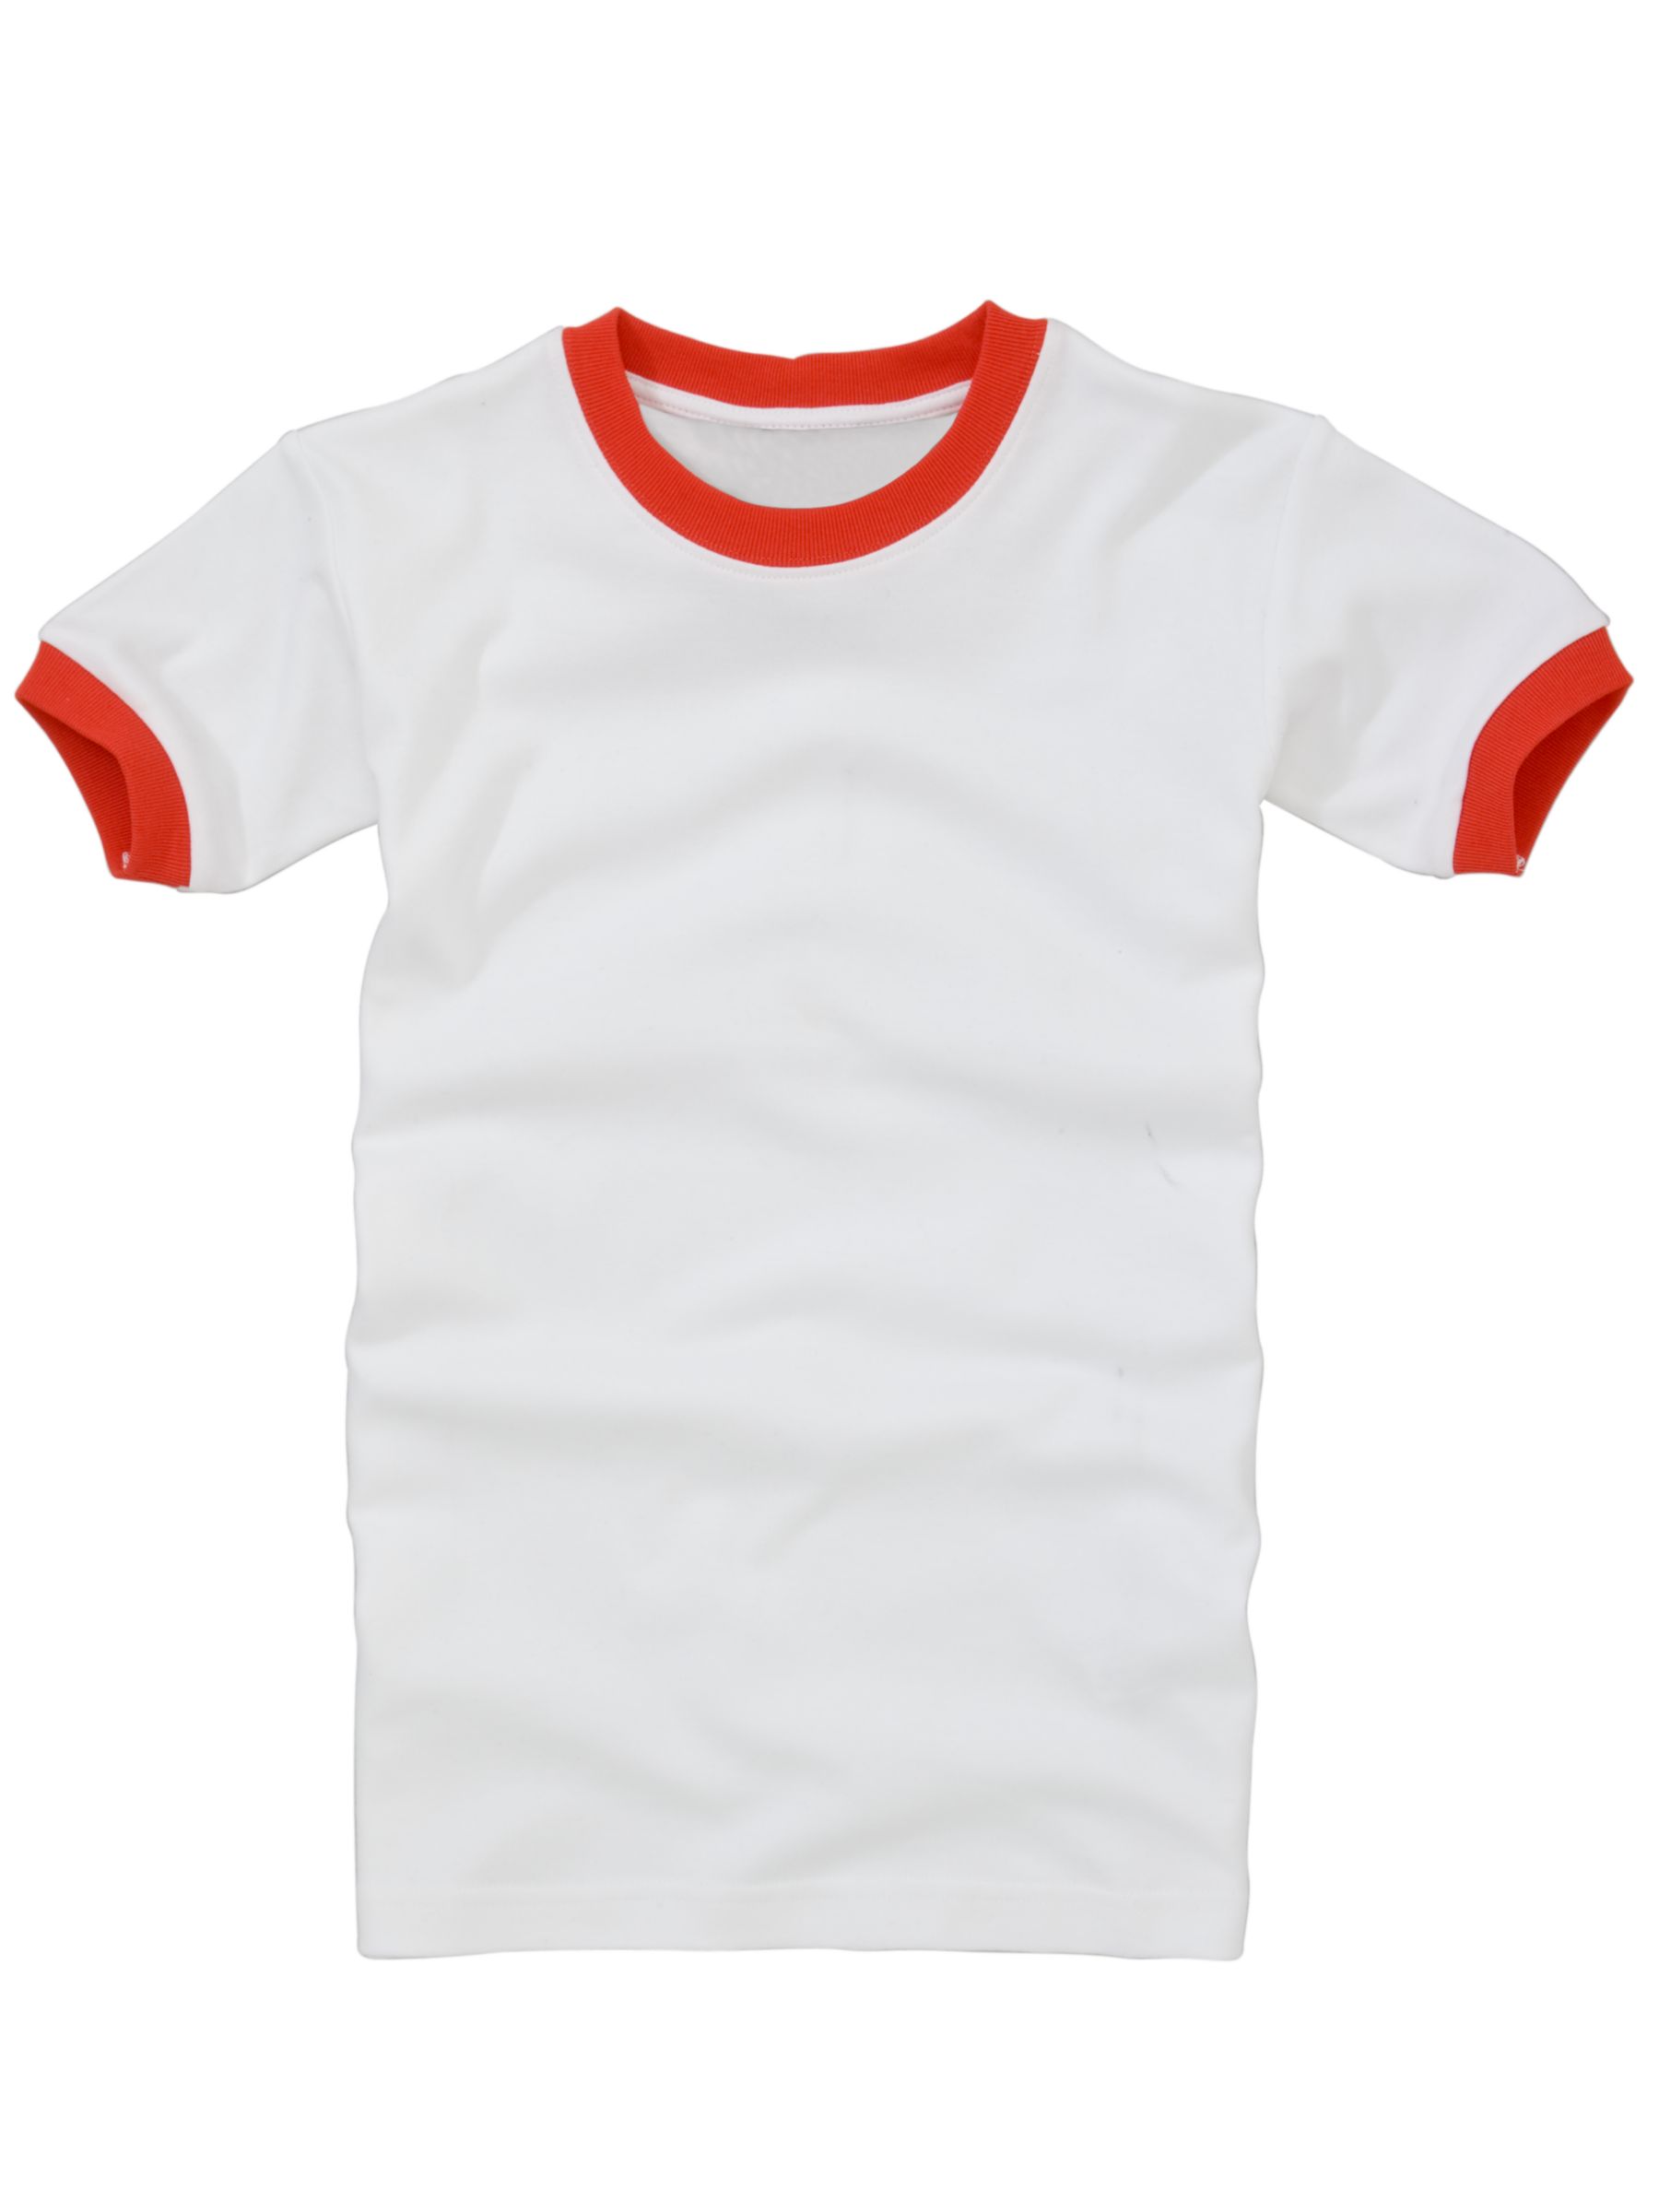 Taverham Hall School School Unisex House PE T-Shirt, White/red